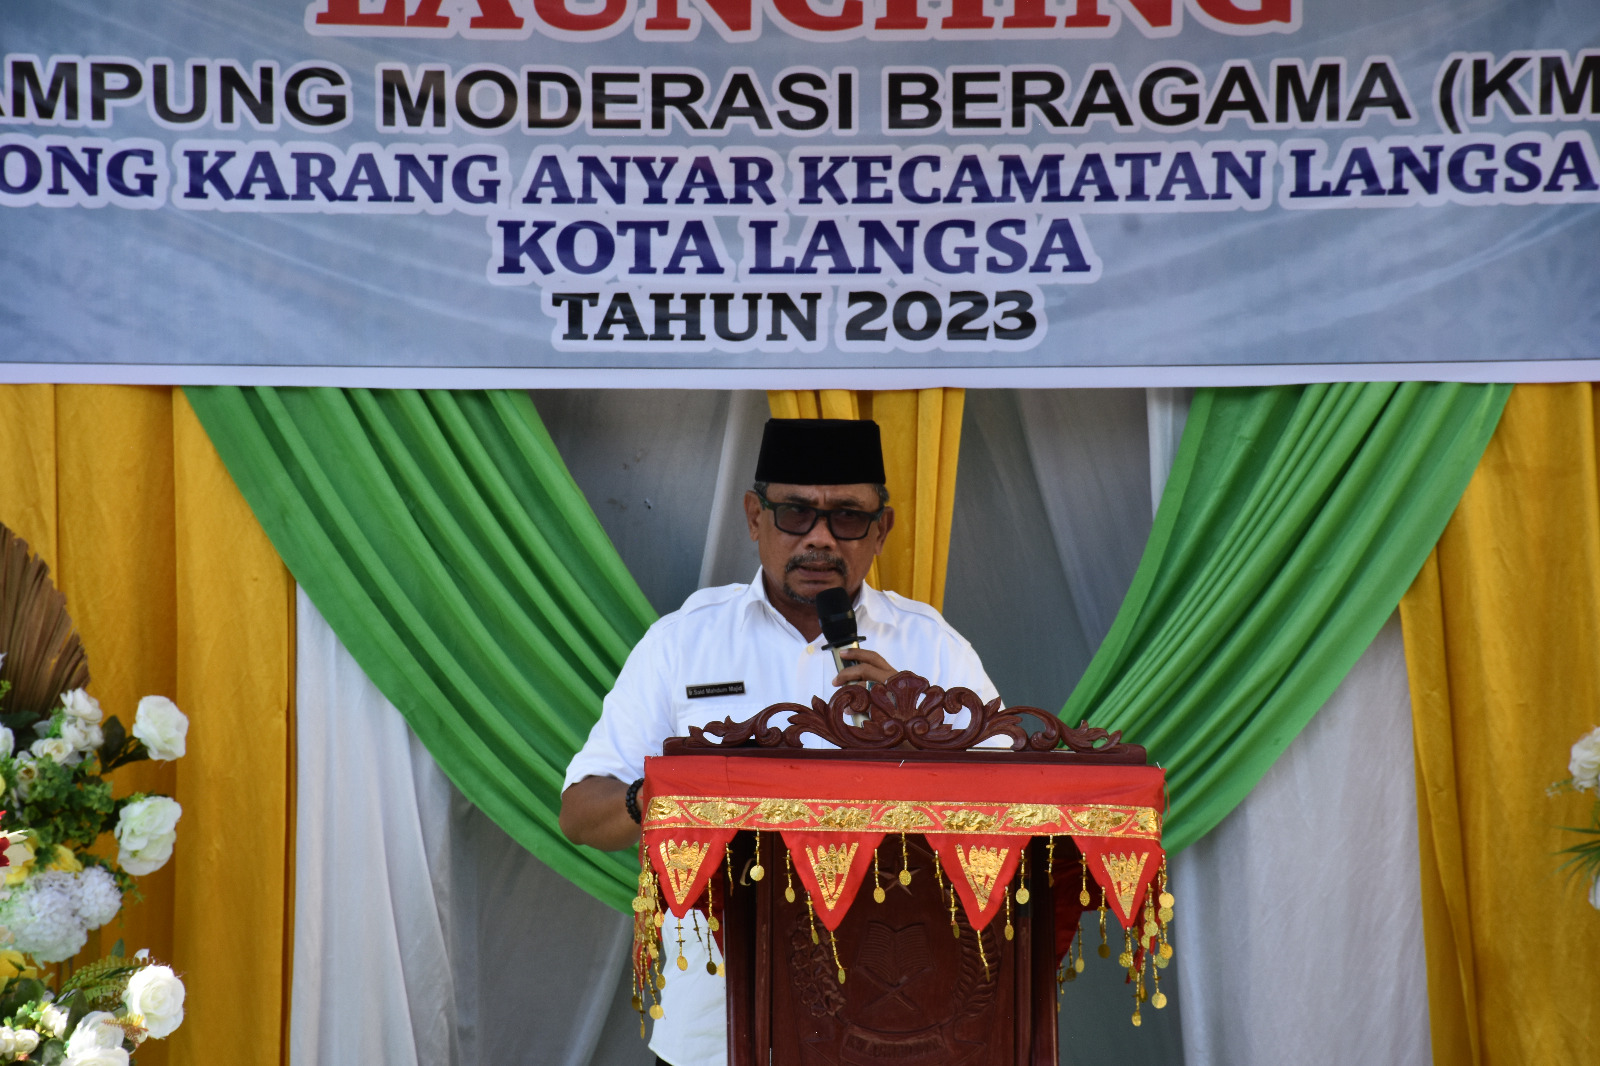 Pj. Walikota Langsa Ir. Said Mahdum Majid Buka Kampung Moderasi Beragama (KMB) Kota Langsa Tahun 2023